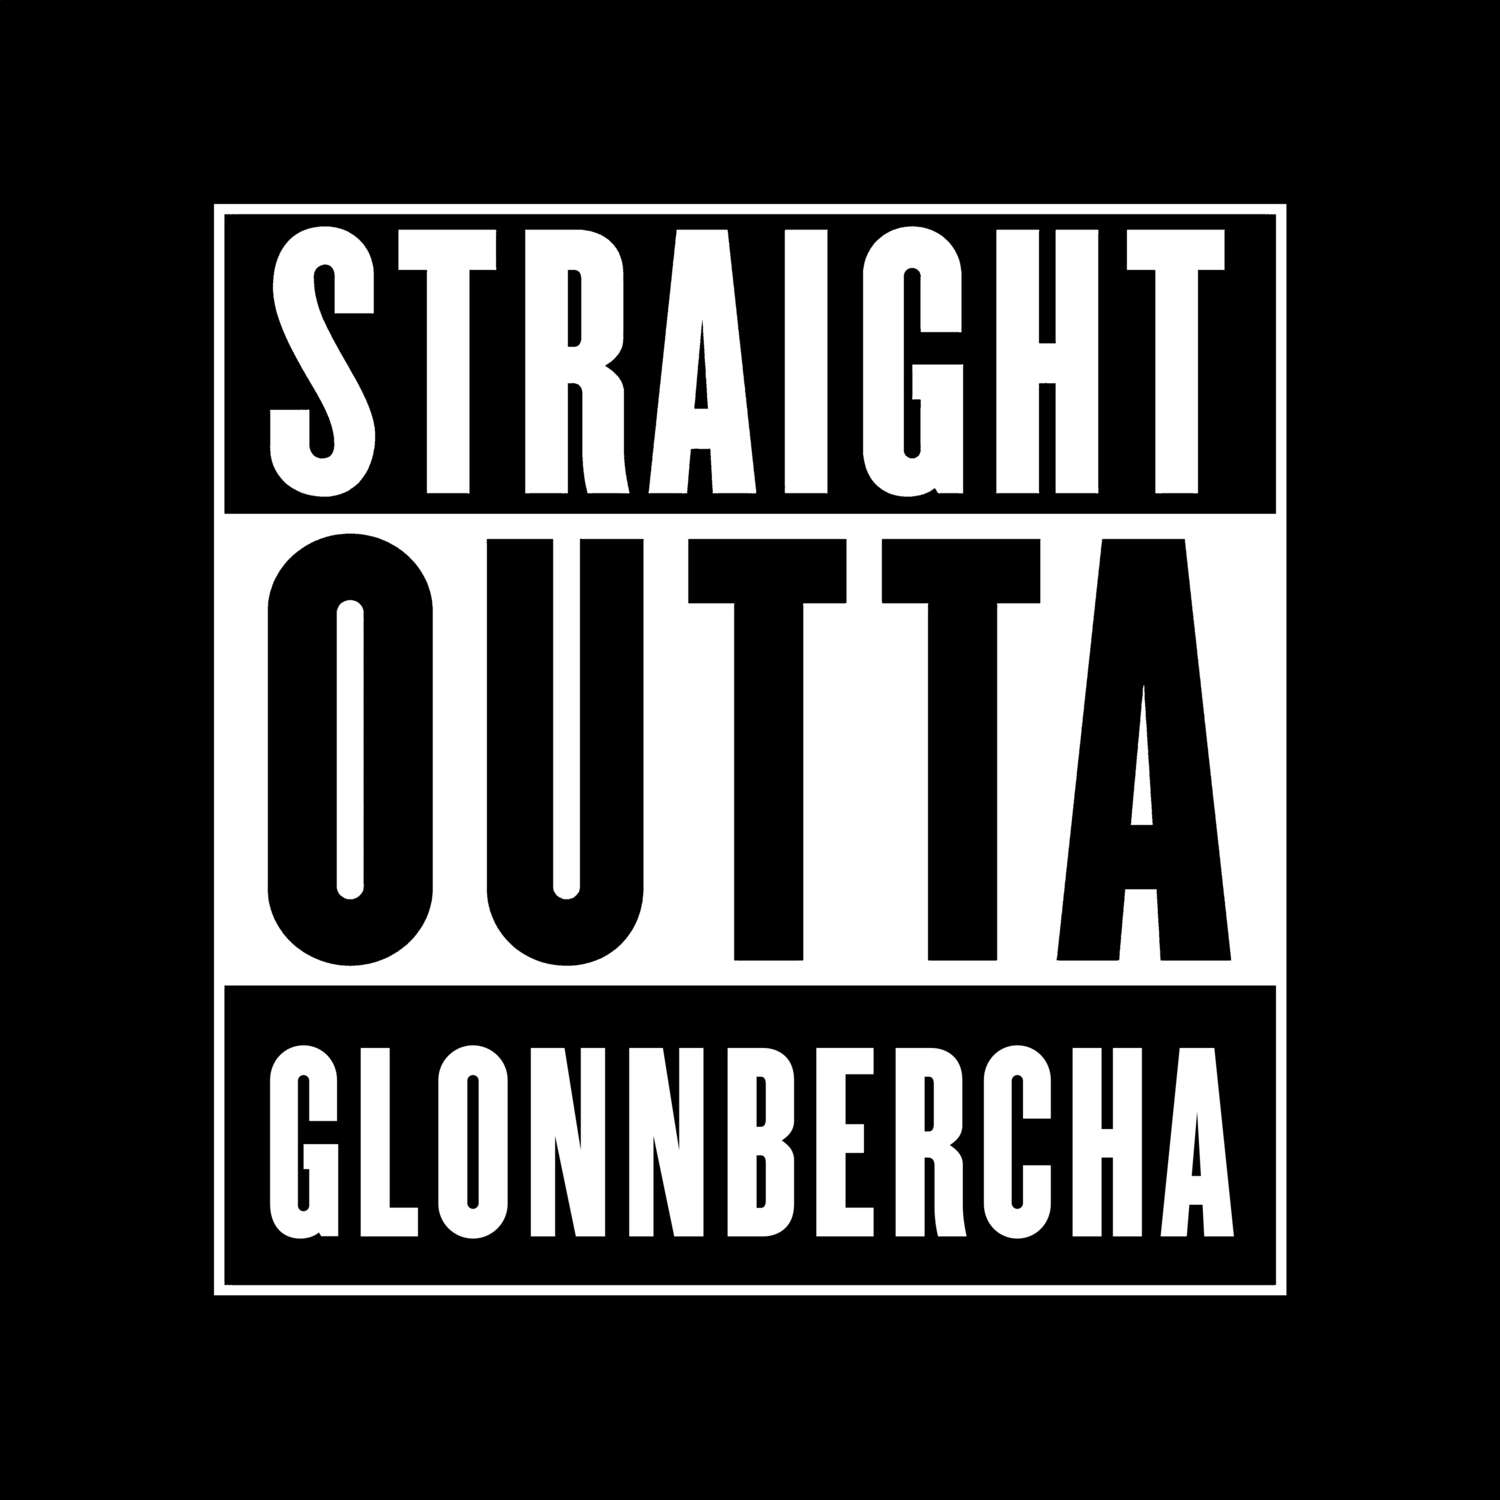 Glonnbercha T-Shirt »Straight Outta«